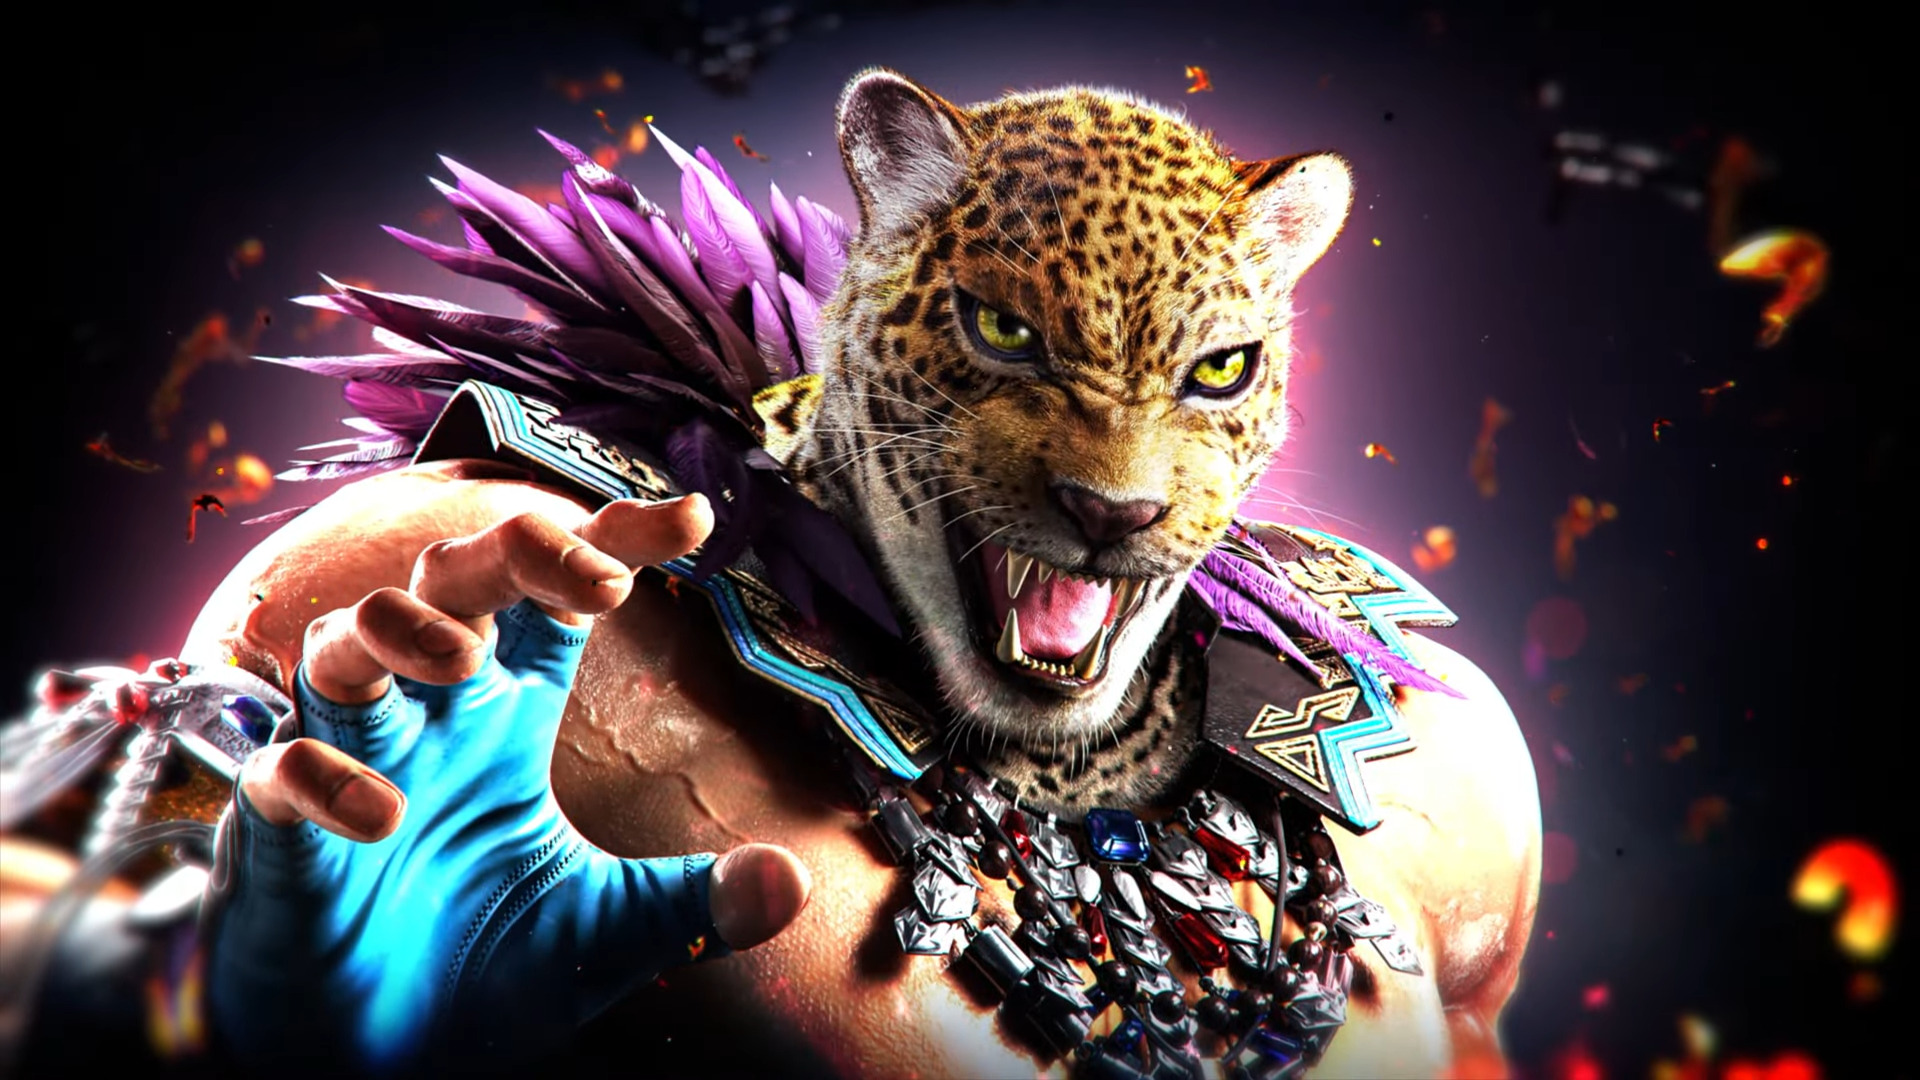 Tekken 8 – King Dominates in Explosive New Trailer